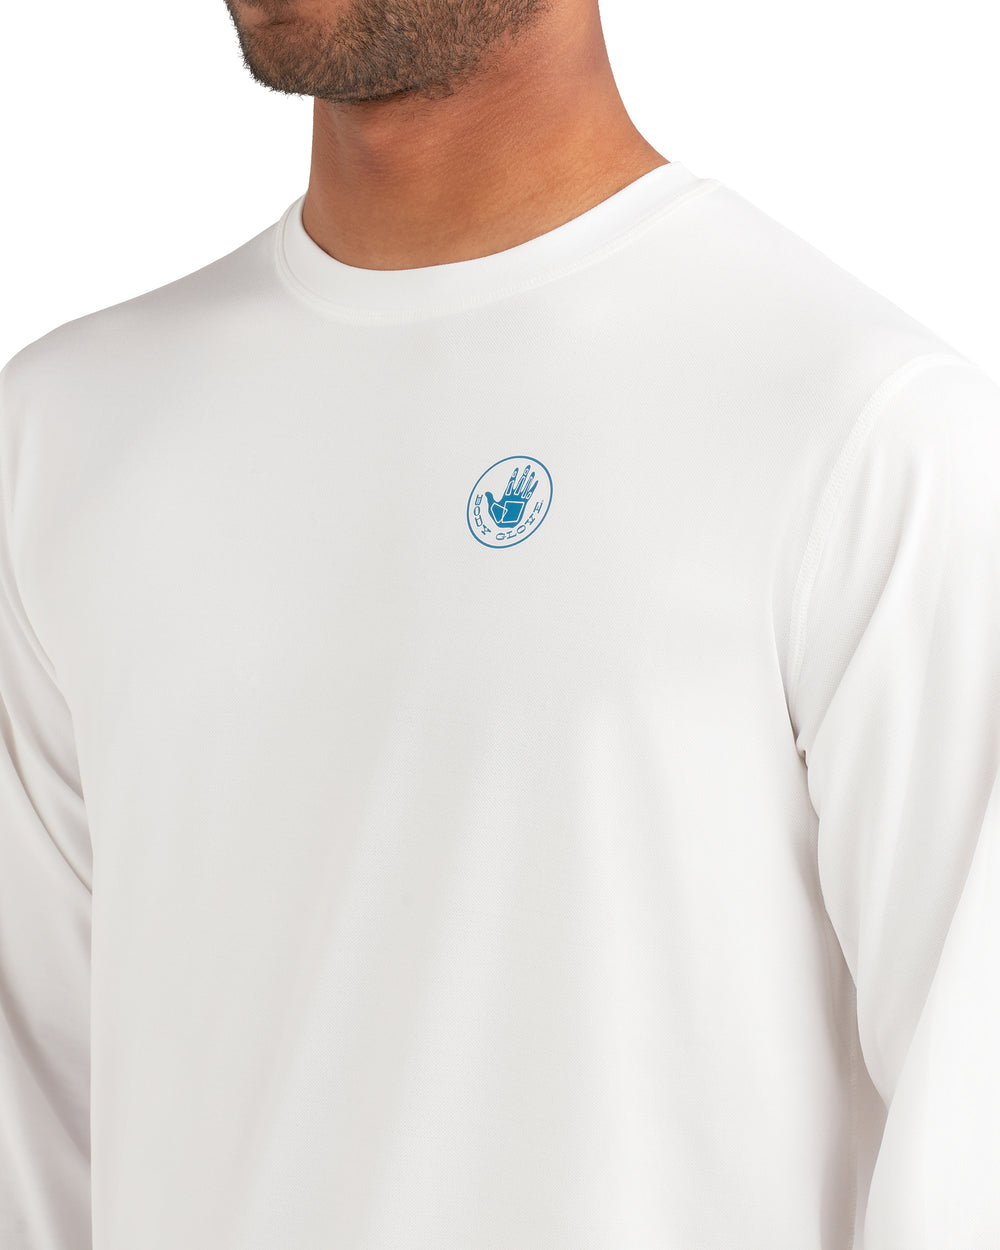 Offshore Pro UPF Long-Sleeve Shirt - White